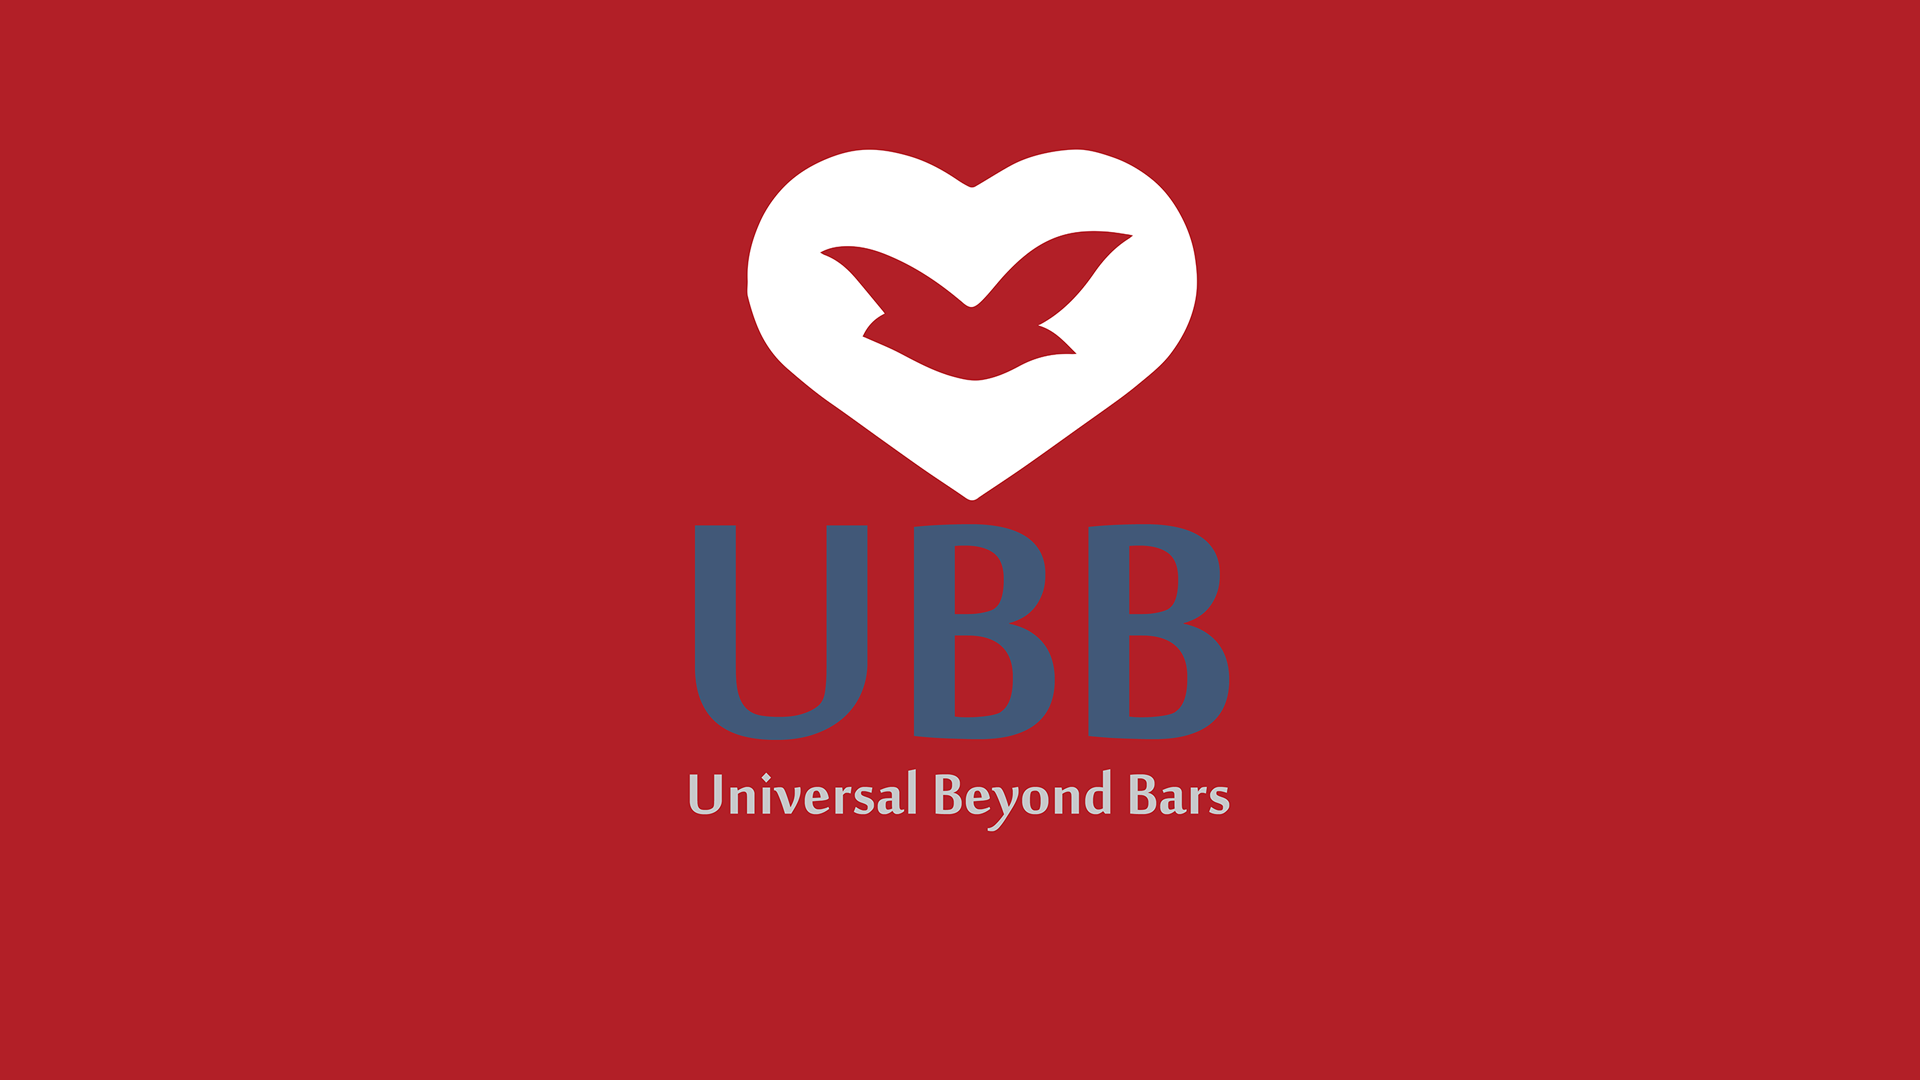 Universal Beyond Bars (UBB)